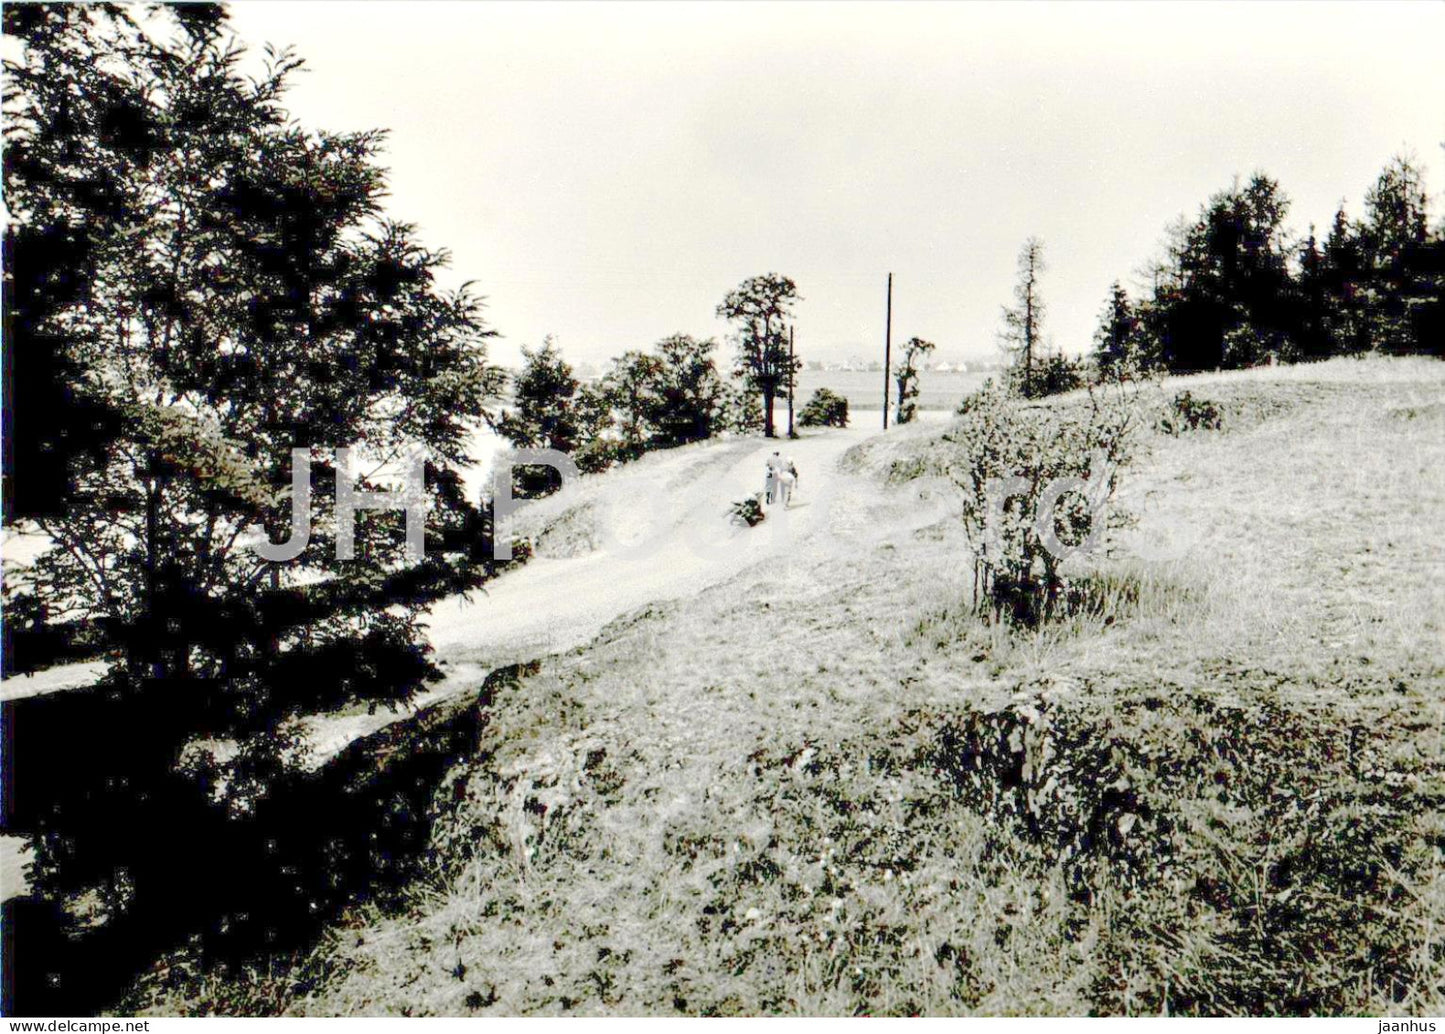 Strz - Karel Capek House at Strz - The path to Stara Hut - 12 - Czech Repubic - Czechoslovakia - unused - JH Postcards